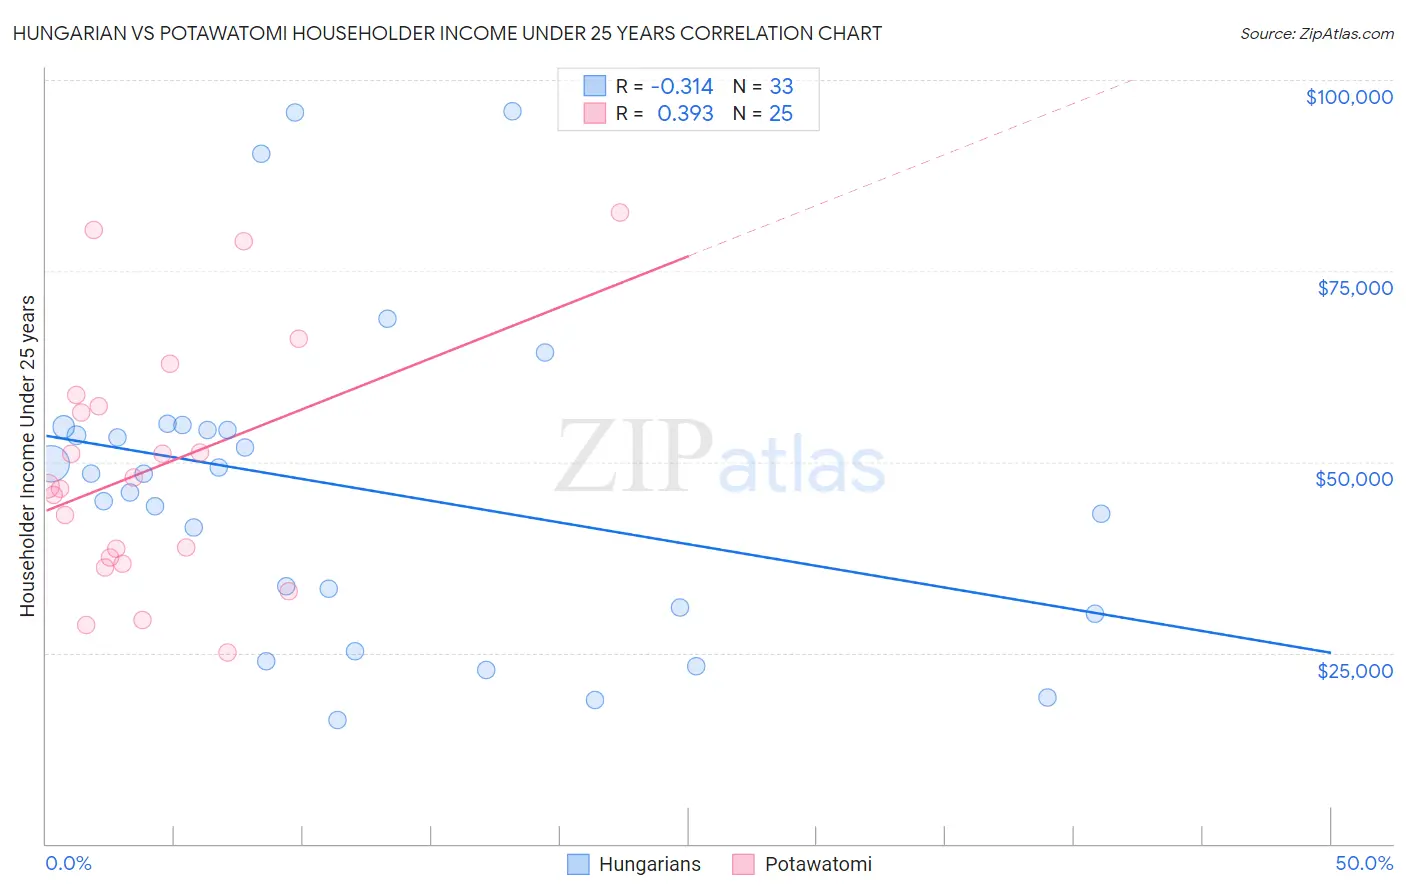 Hungarian vs Potawatomi Householder Income Under 25 years